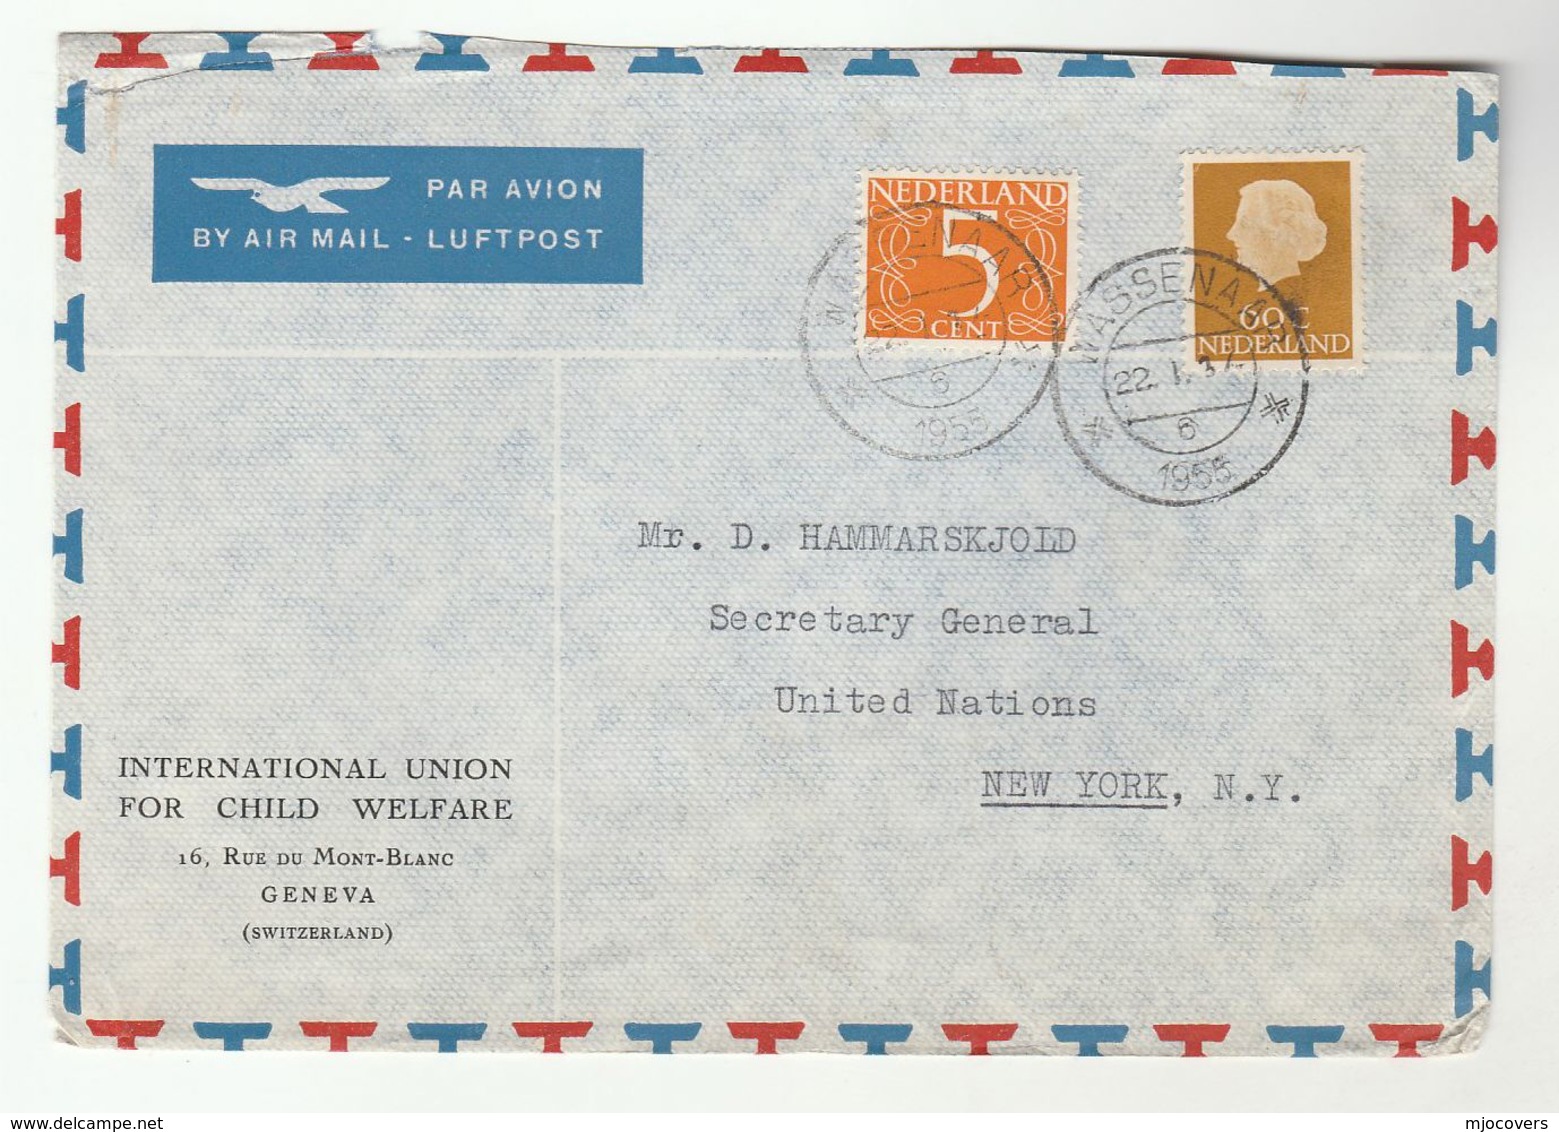 1955 Internat CHILD WELFARE UNION To DAG HAMMARSKJOLD UN SECRETARY GENERAL  Netherlands To USA United Nations Cover - UNO